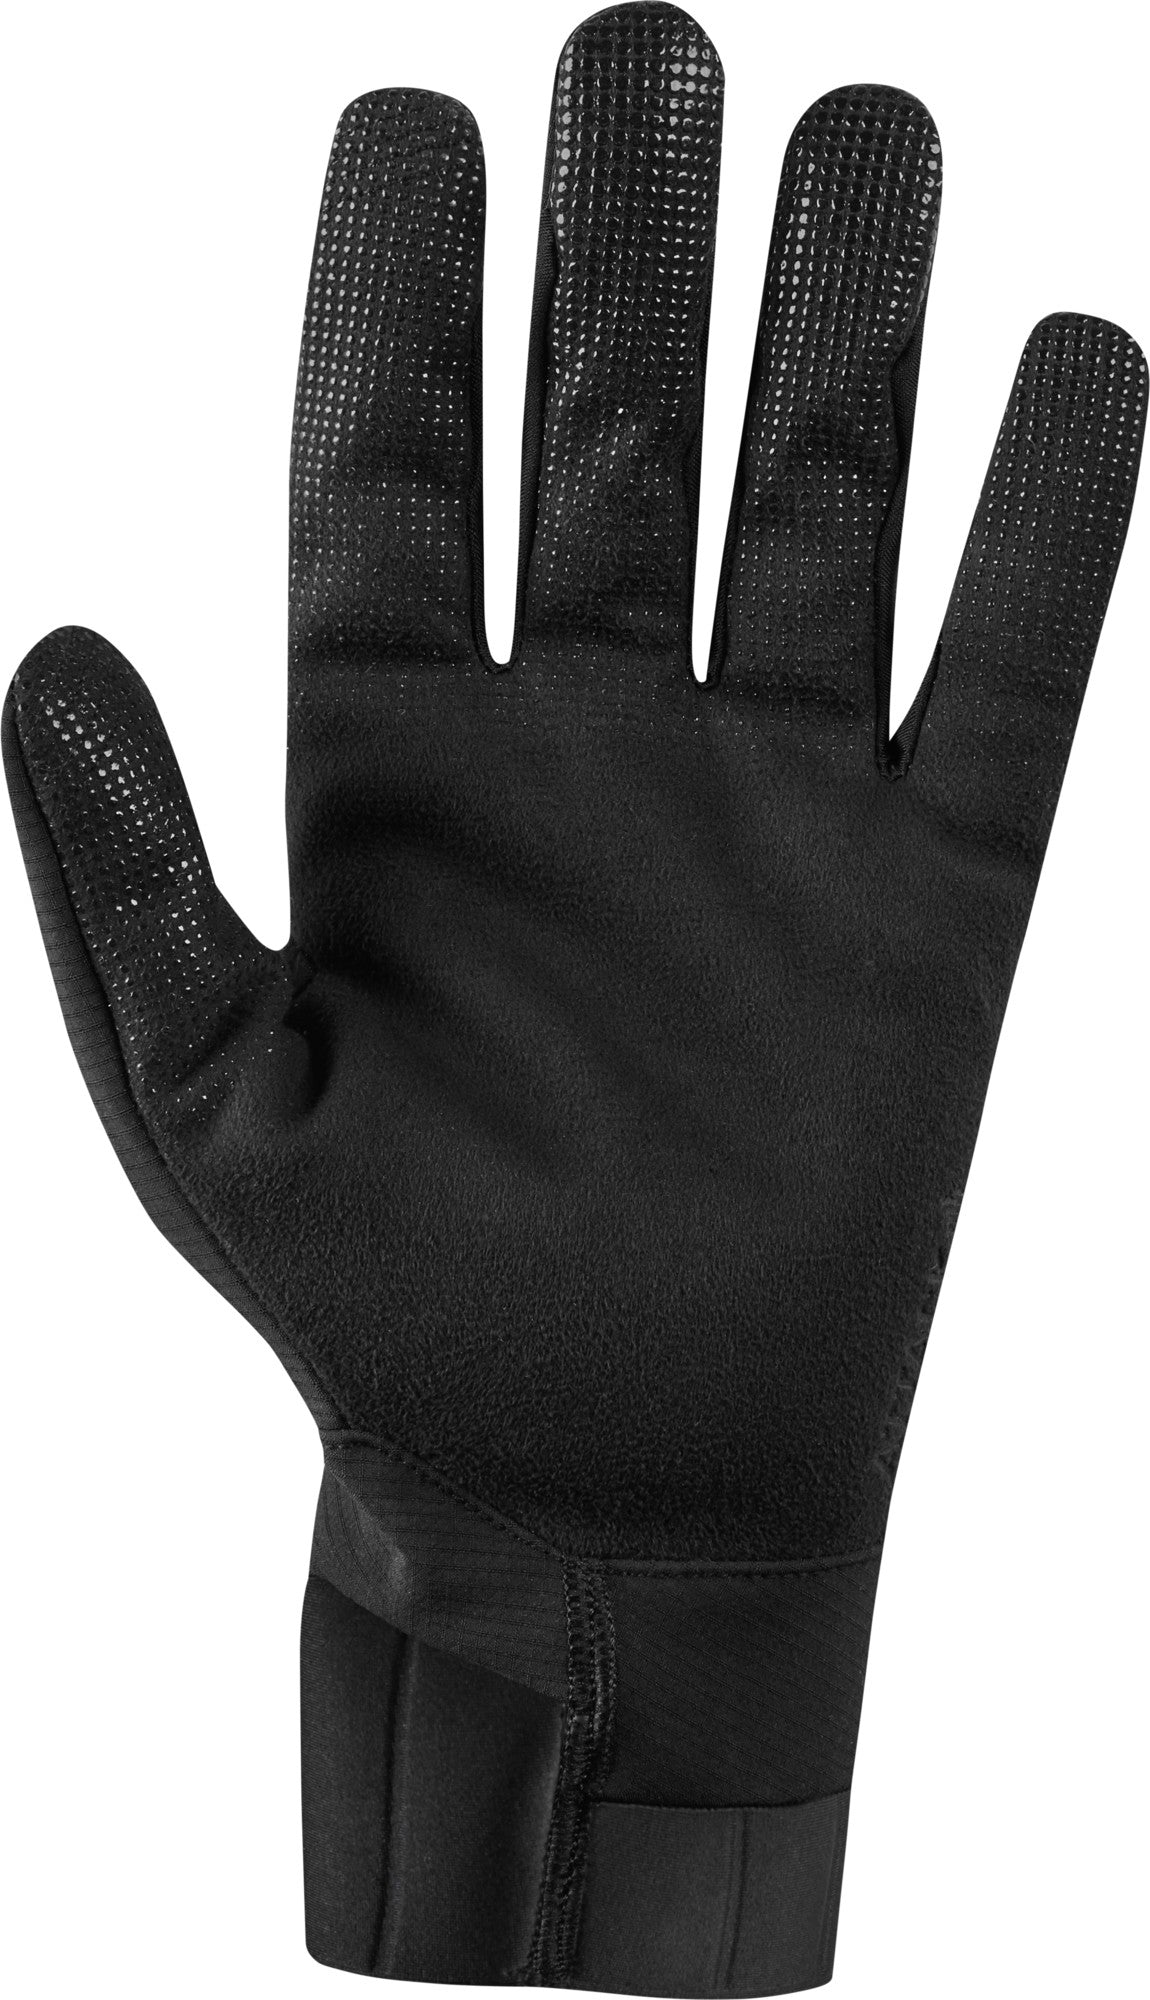 Fox Defend Pro Fire Gloves Black